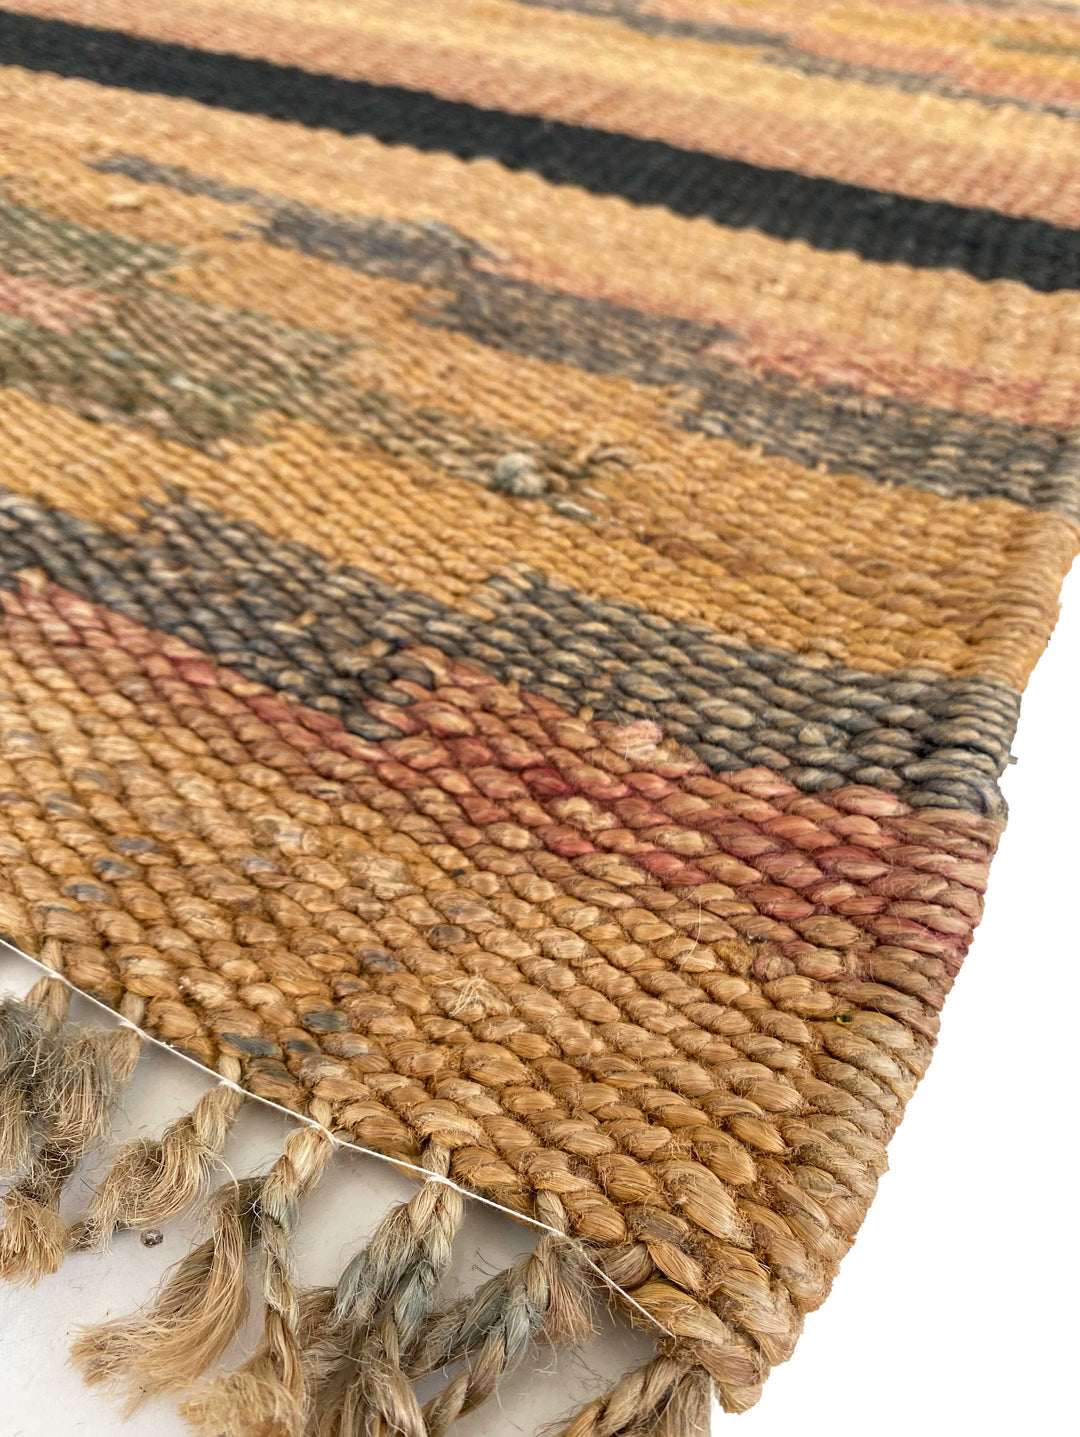 Cosecha - Size: 4.7 x 4.4 - Imam Carpet Co